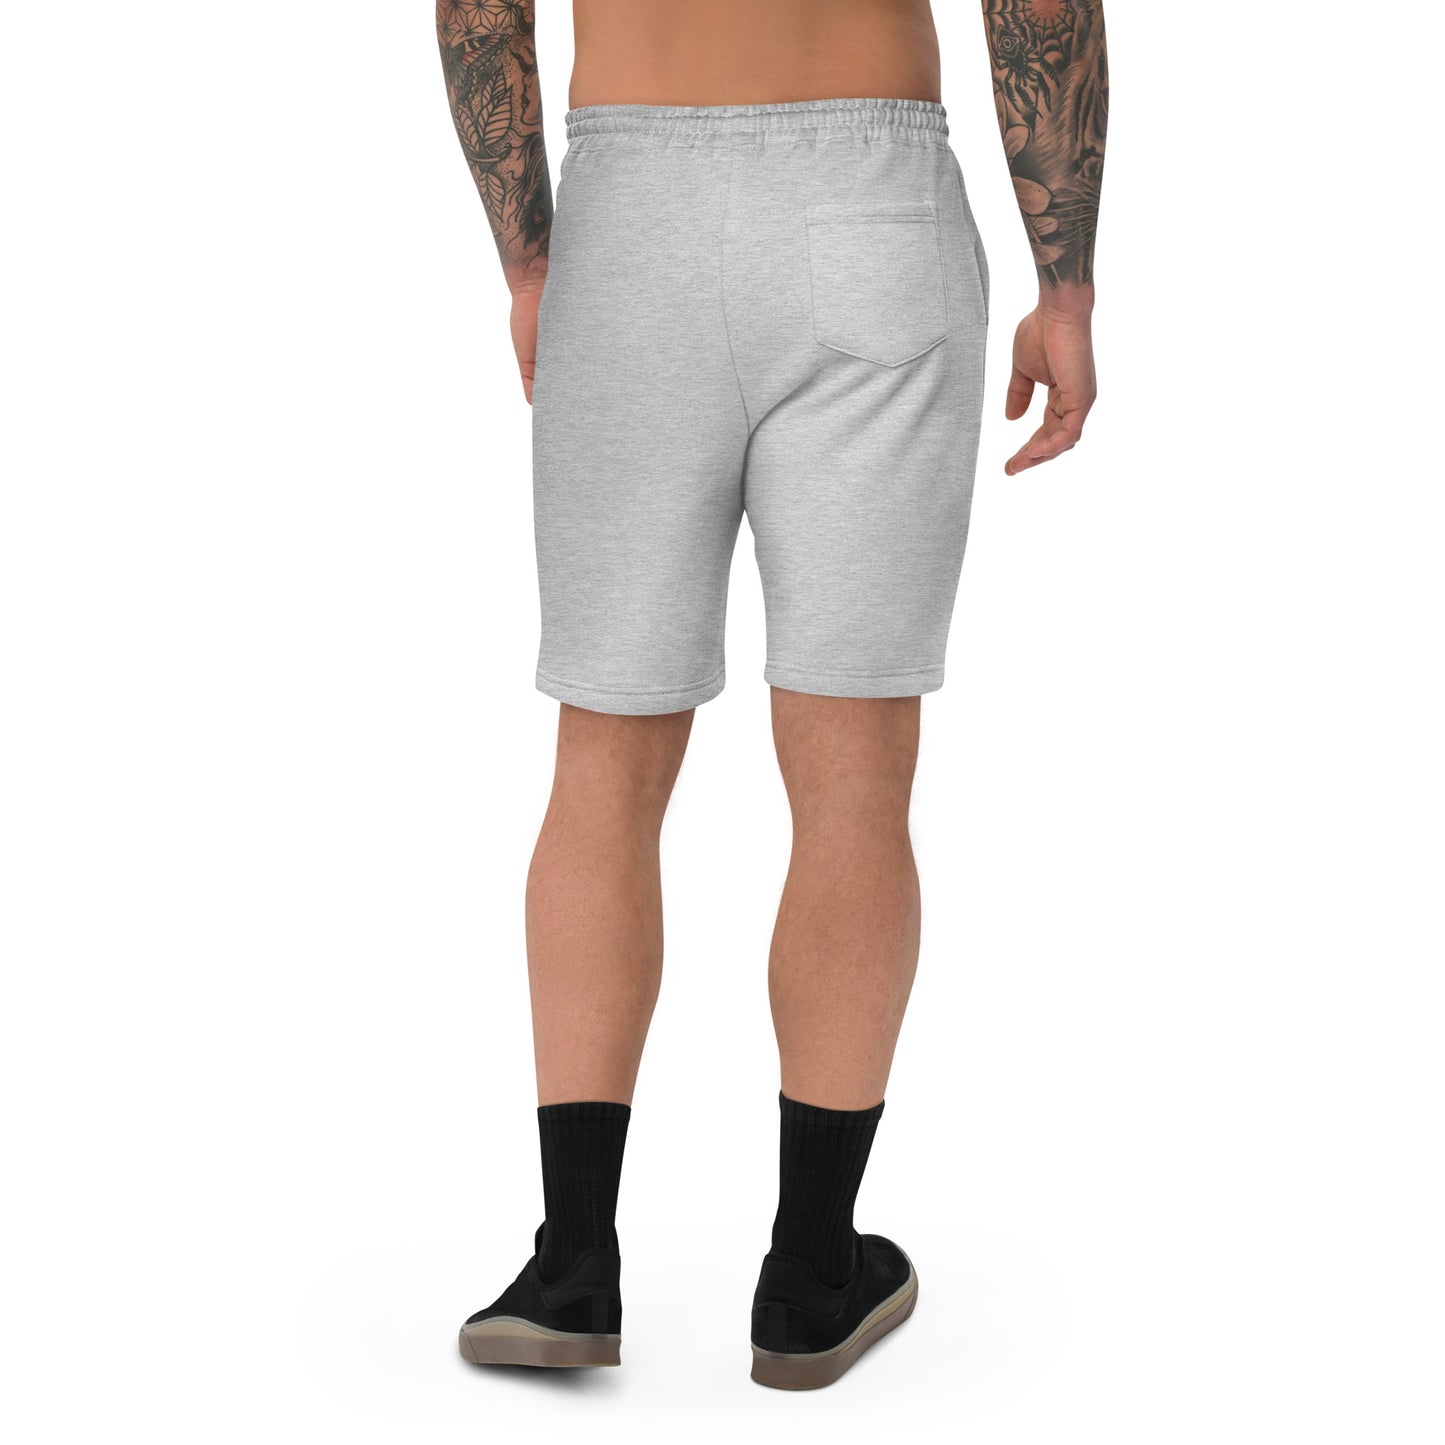 El Salvador Men's fleece shorts